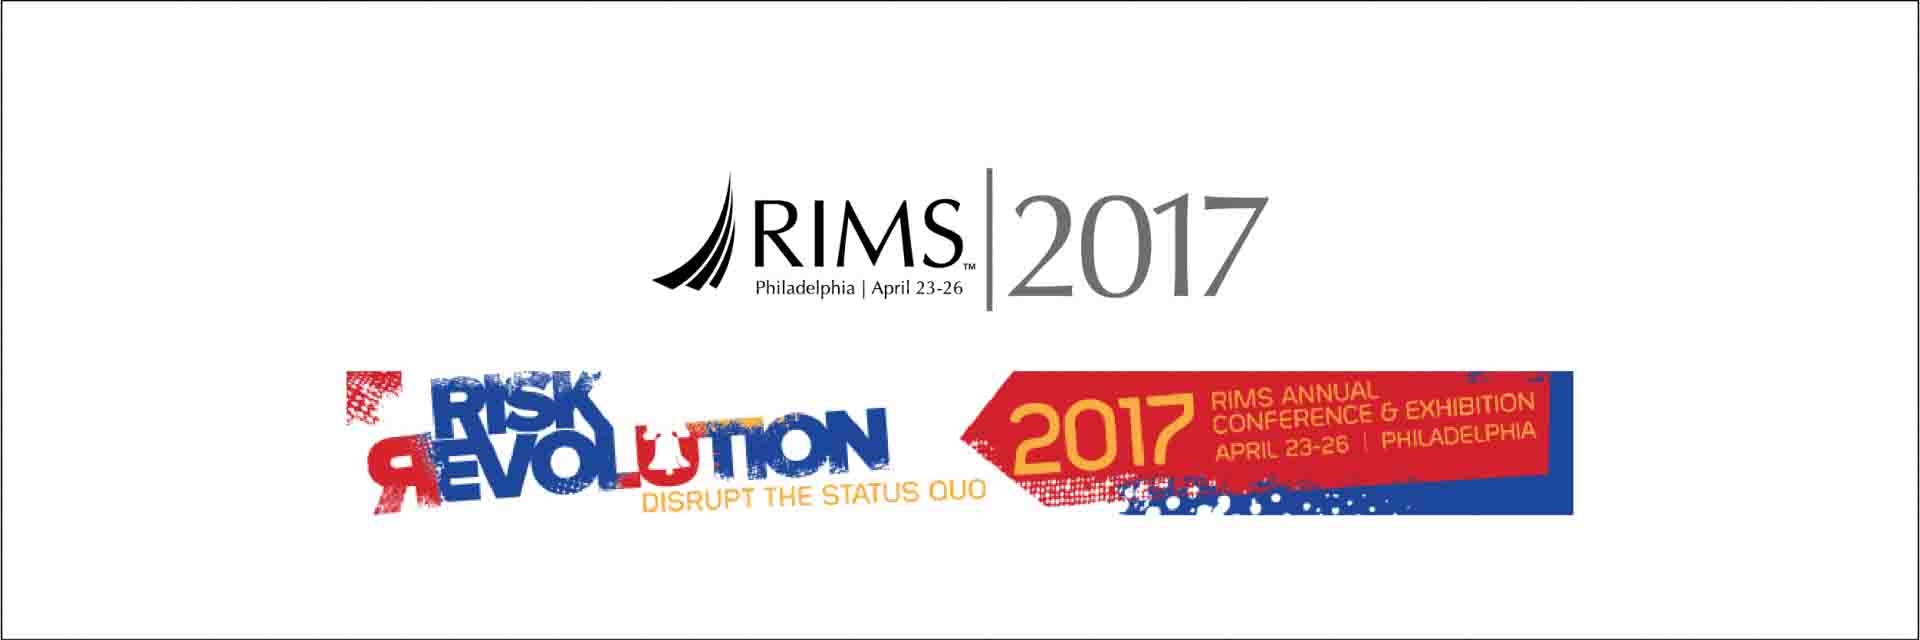 RIMS 2017 logos